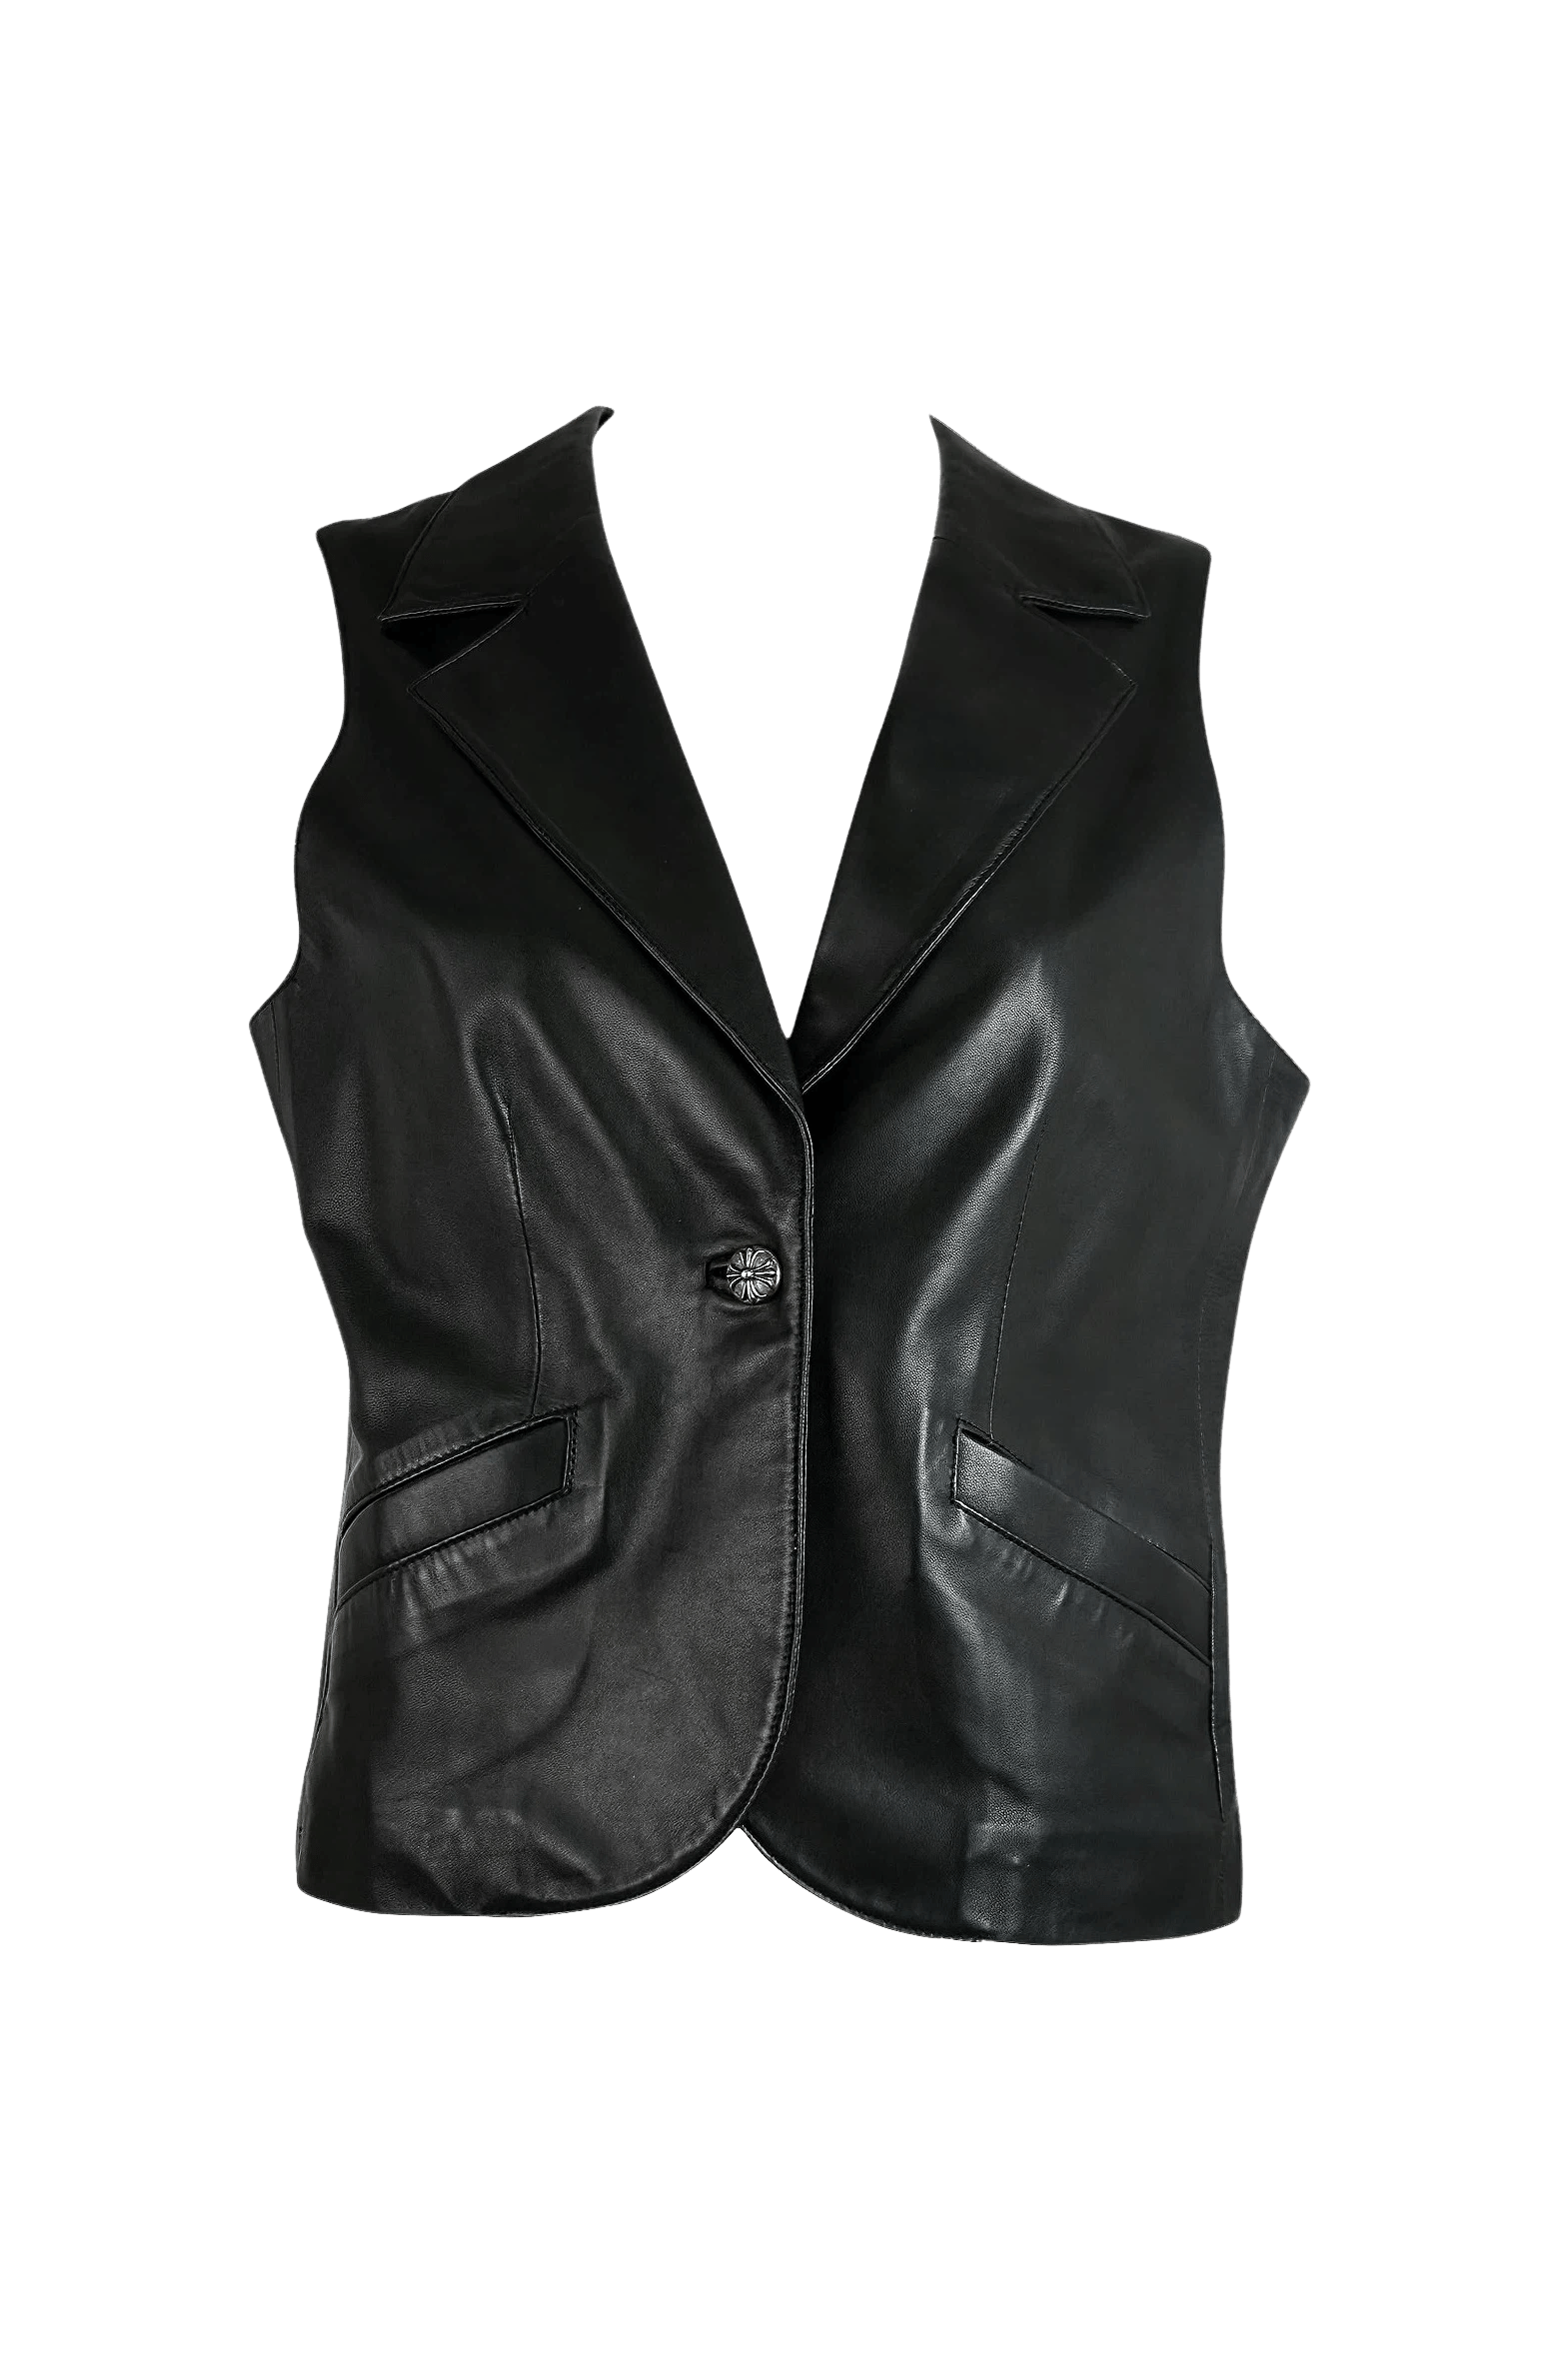 Chrome Hearts Black Leather Vest